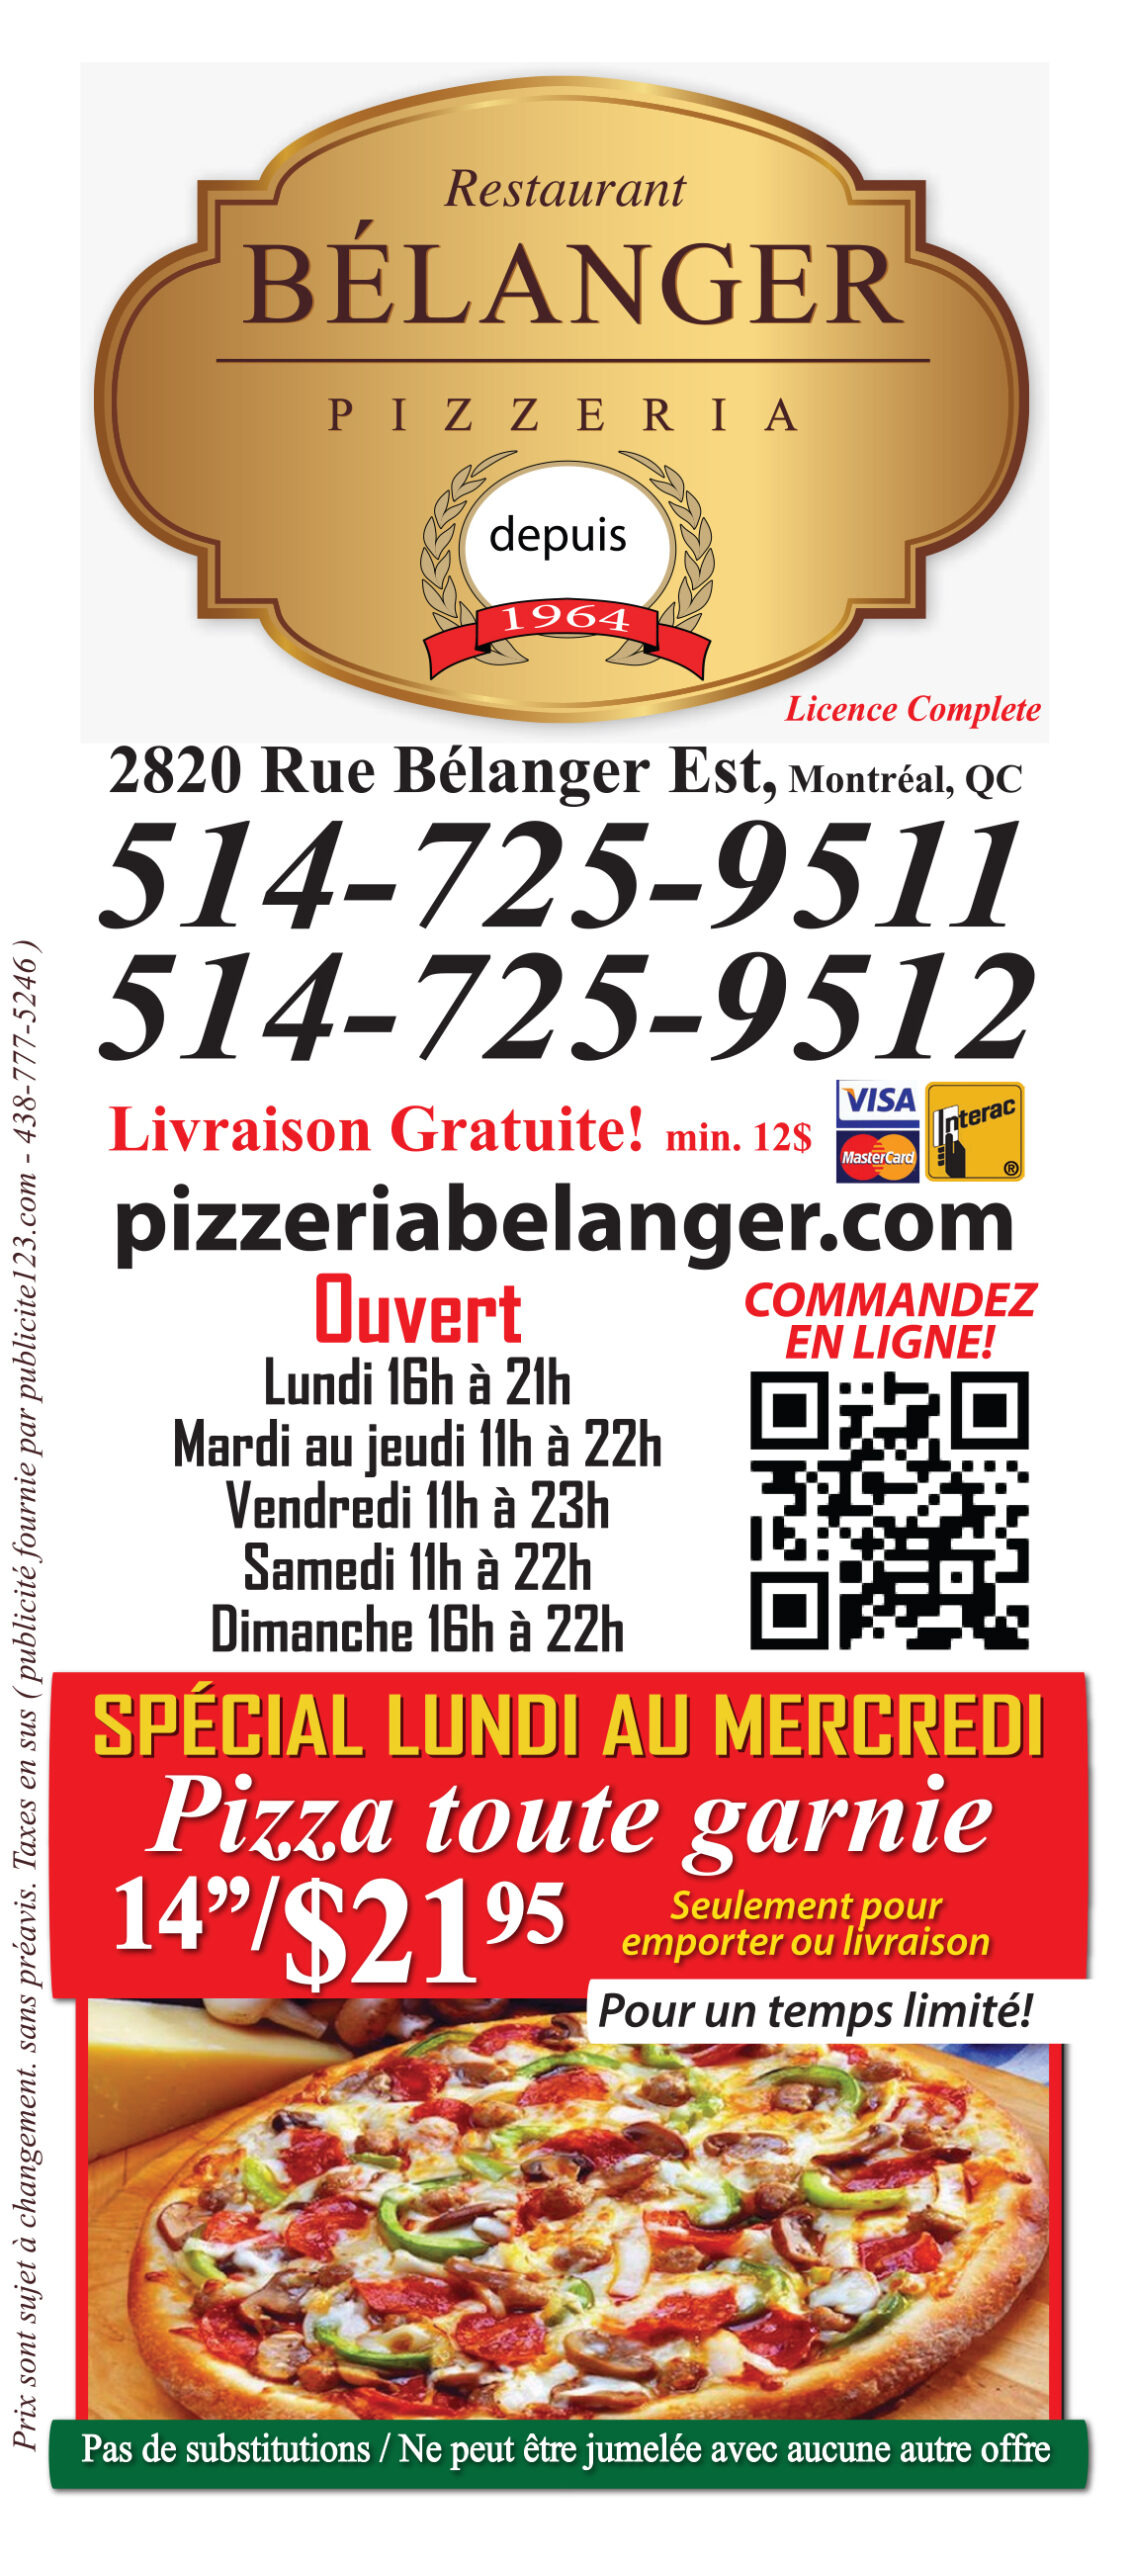 PizzaBelanger_TakeOutMenu_11x8.5_R-V_8-2021